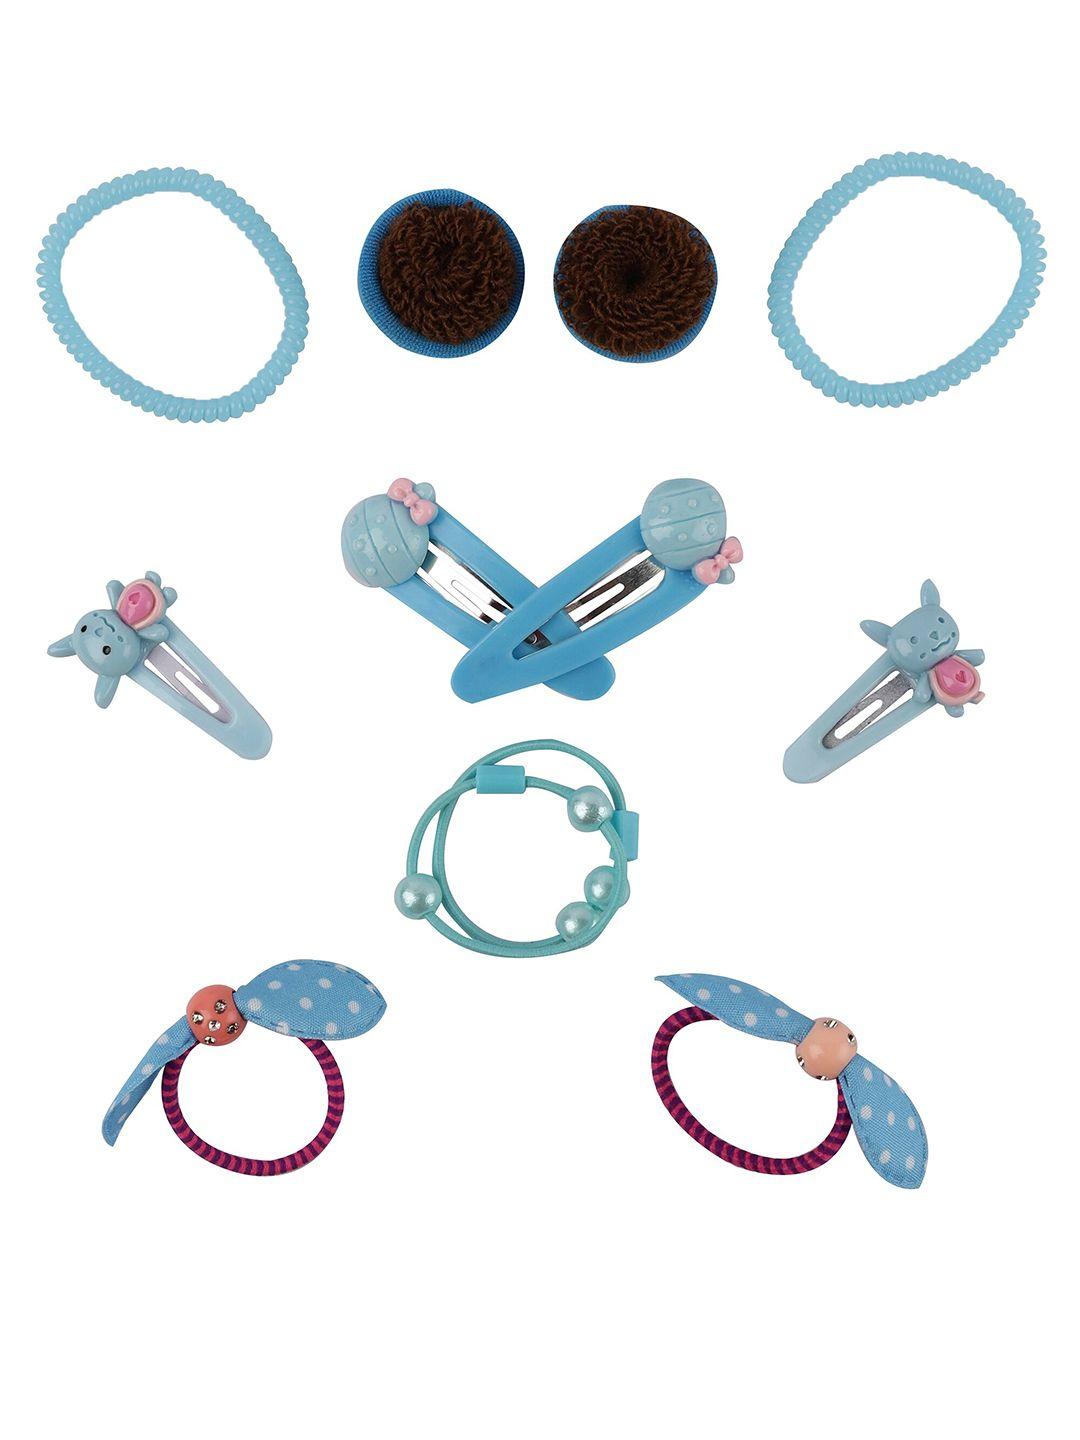 foliyaj-girls-set-of-14-blue-hair-accessory-with-cat-shape-storage-box